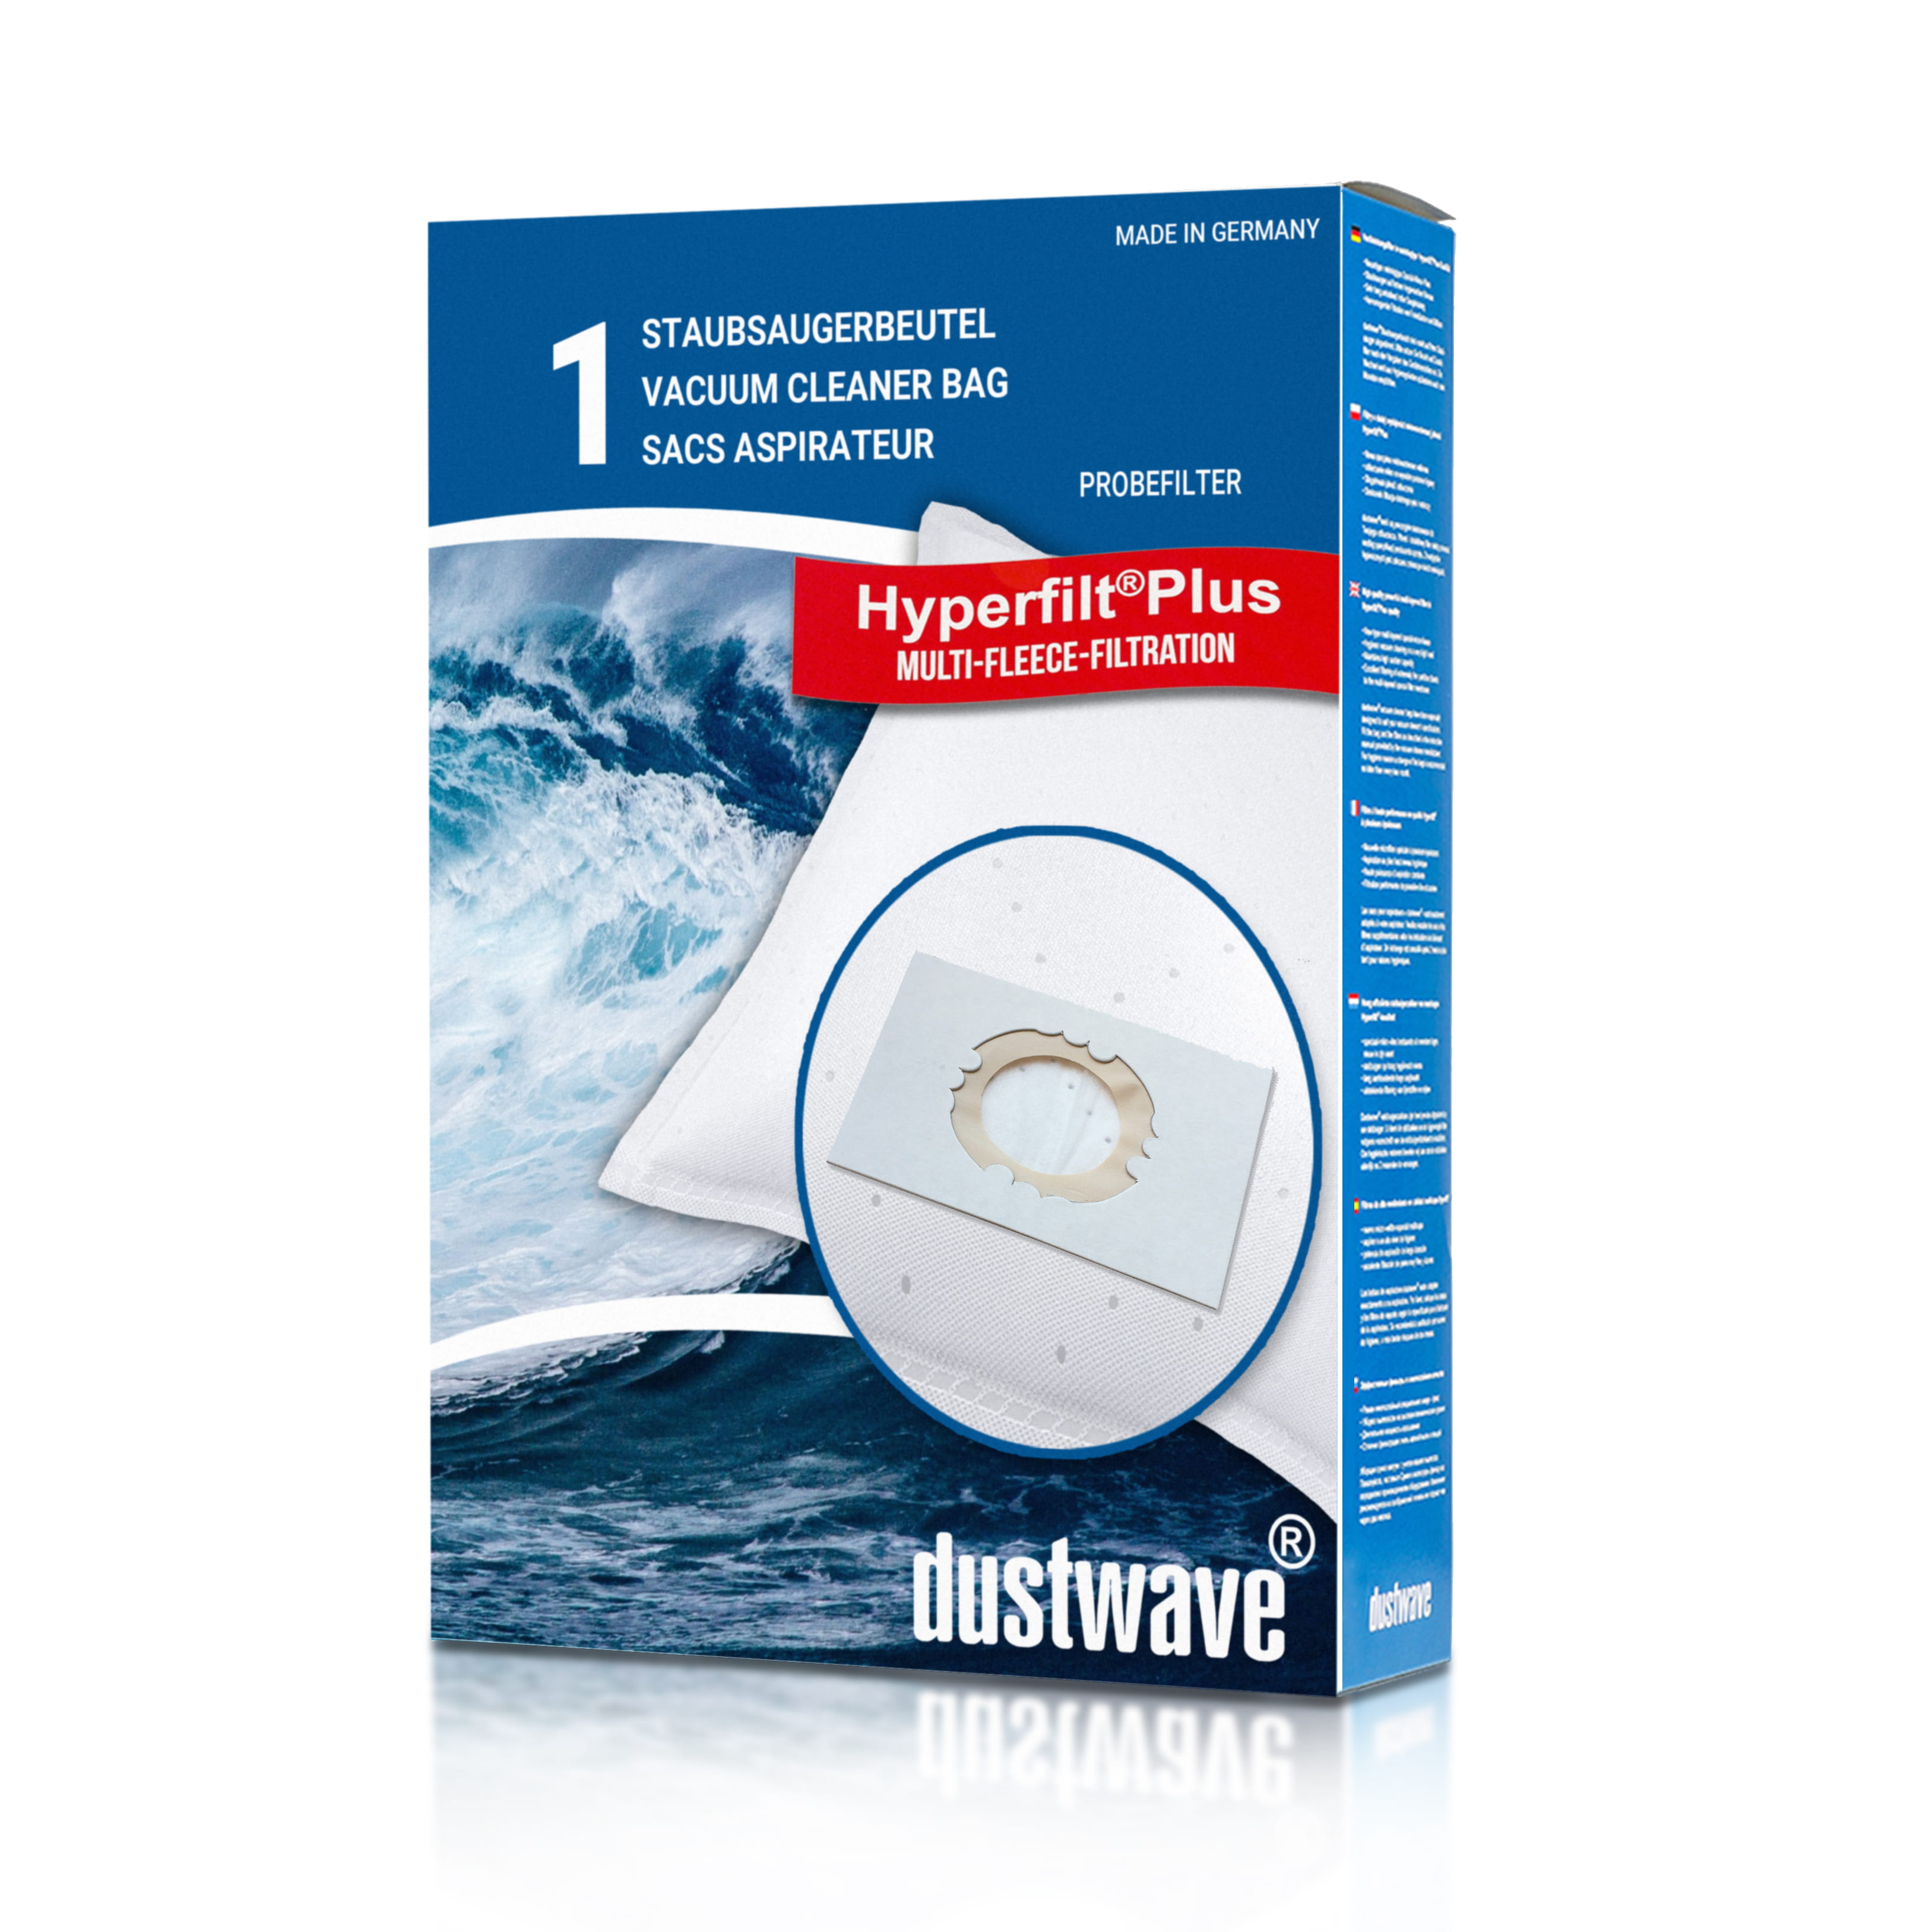 Dustwave® 1 Staubsaugerbeutel für De&#039;Longhi XTC 12 E - Compacto - hocheffizient mit Hygieneverschluss - Made in Germany